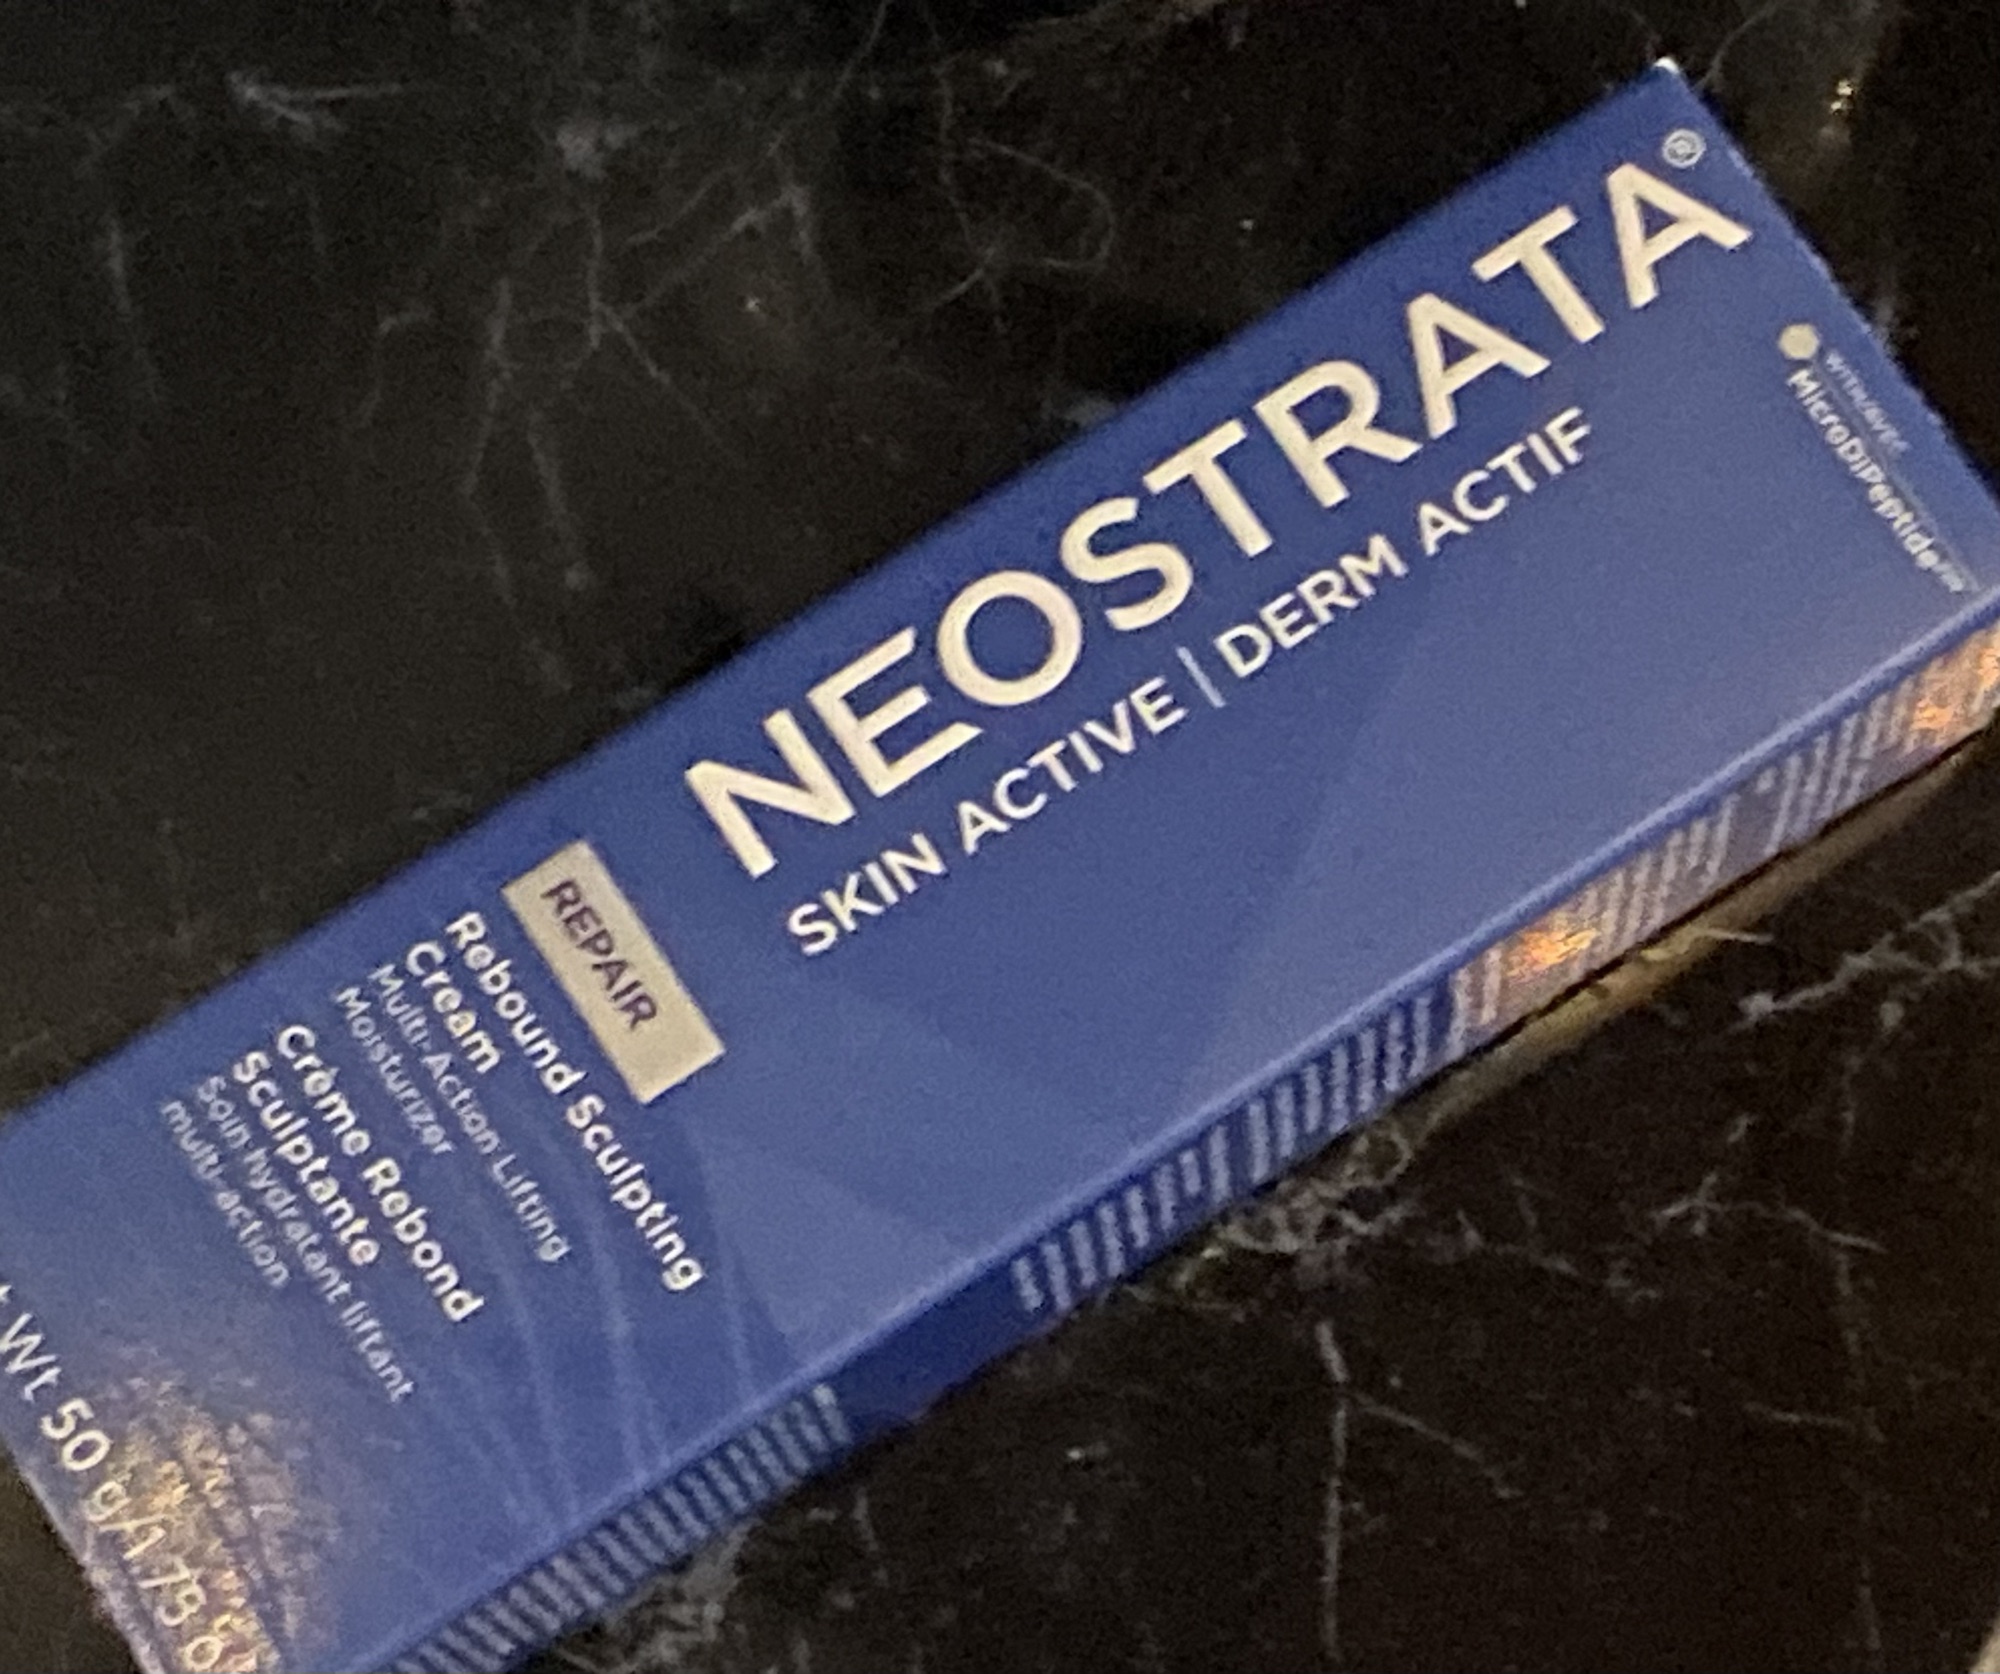 Neostrata Rebound sculpting cream